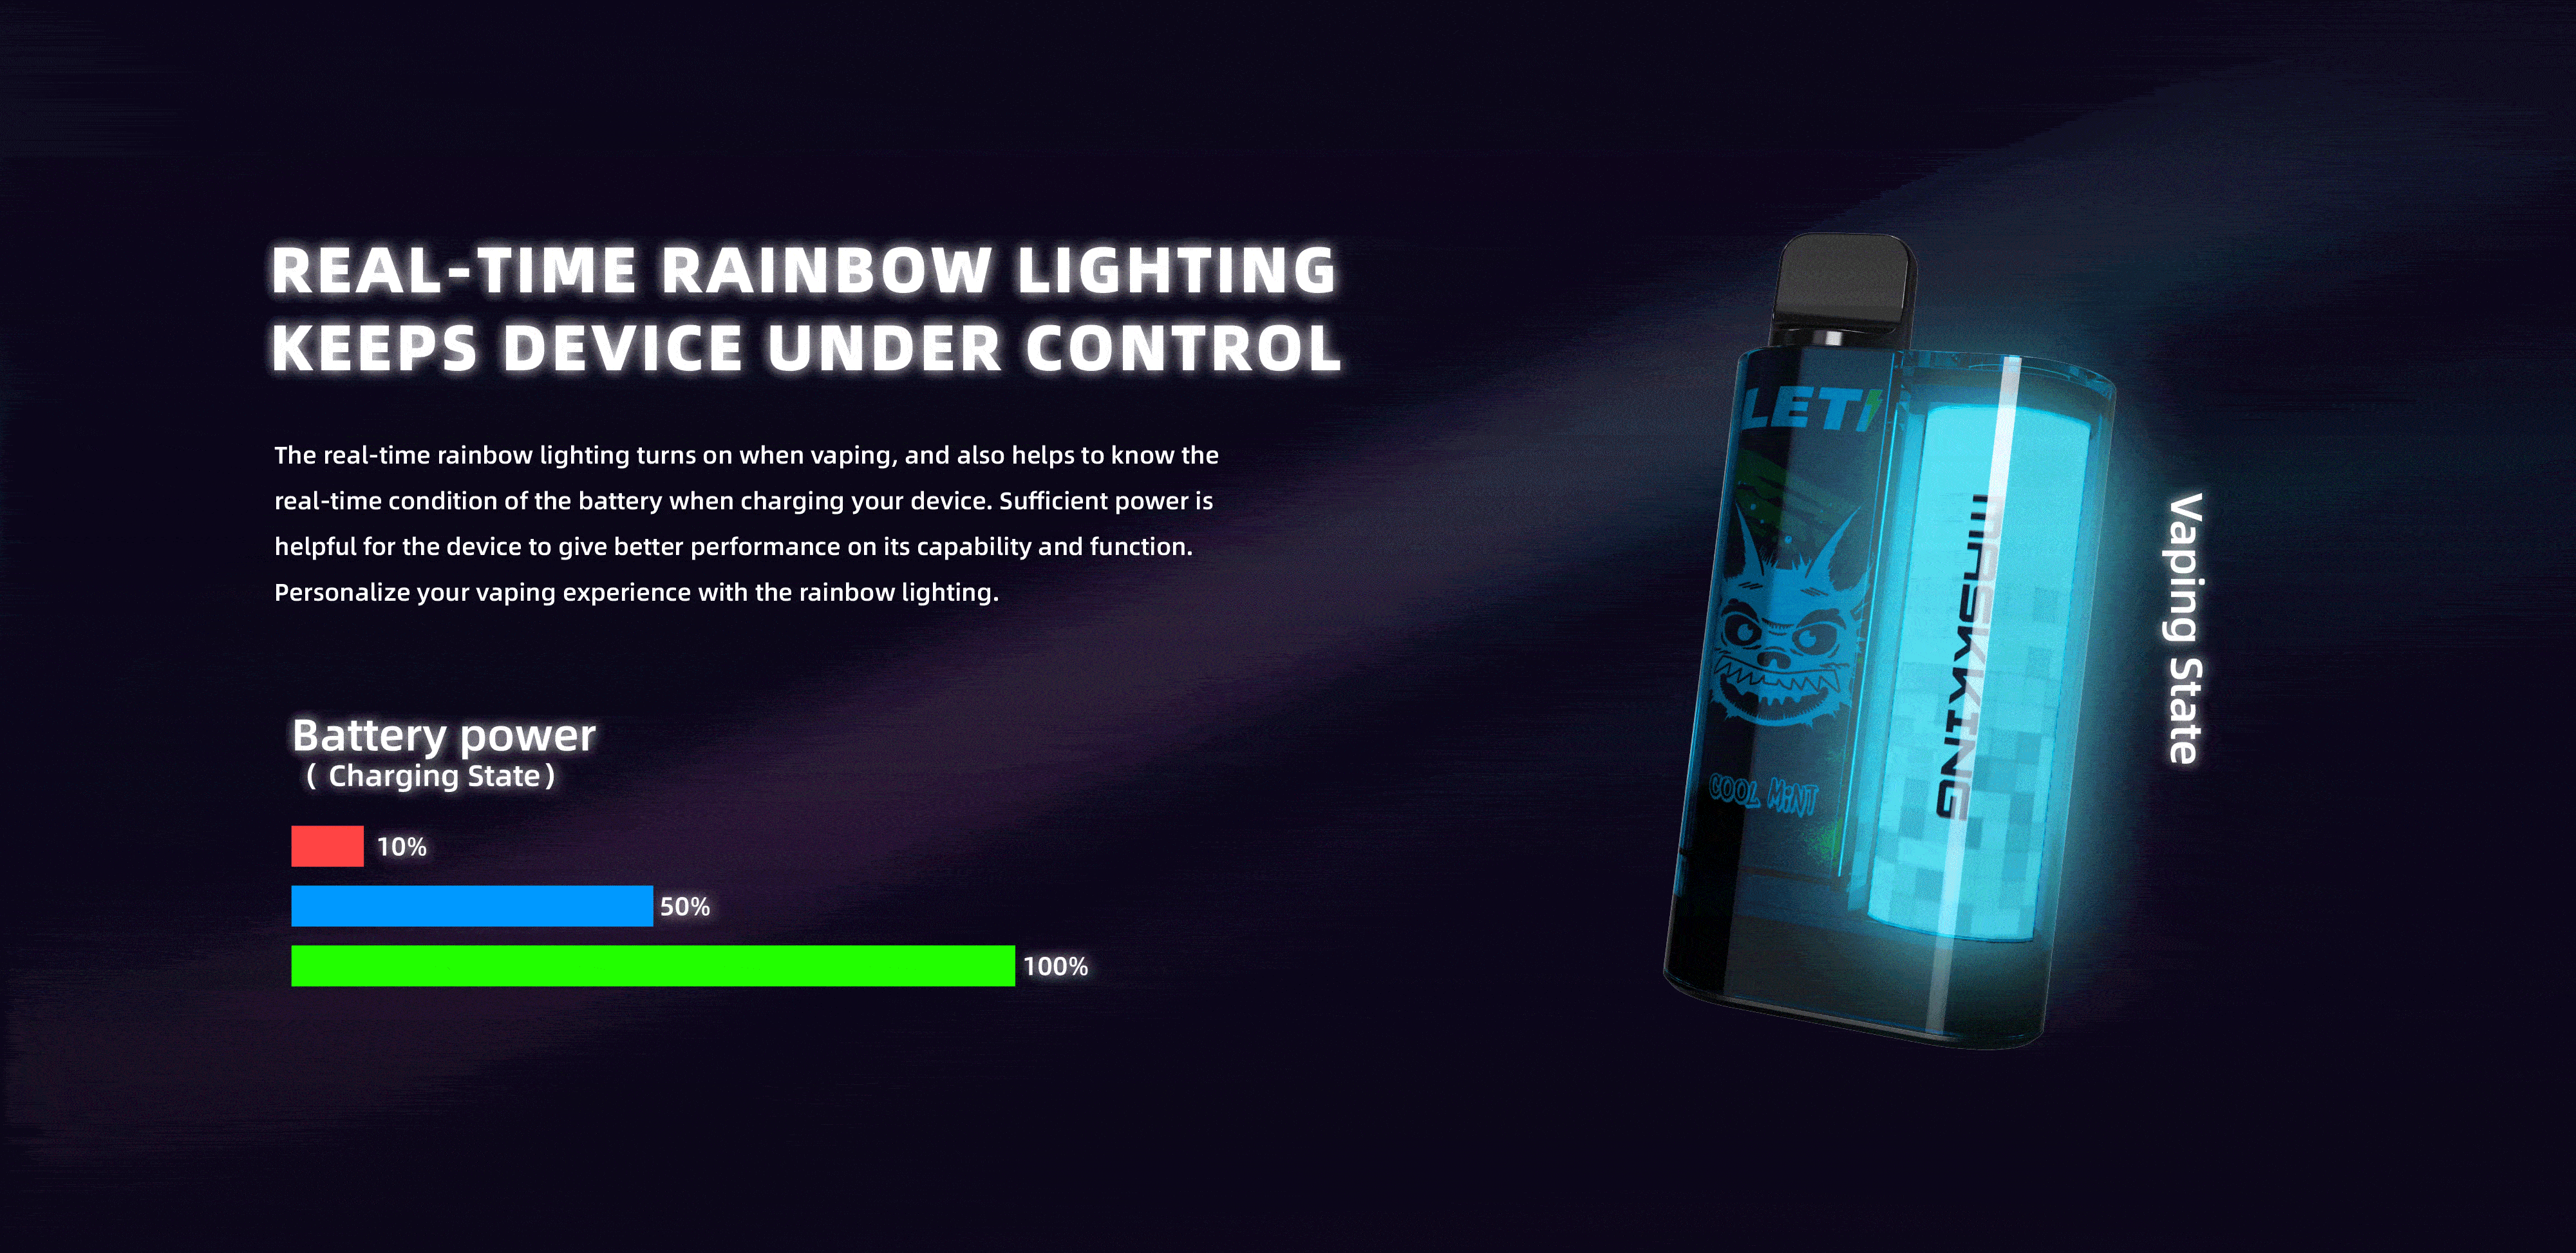 maskking leti rainbow lighting